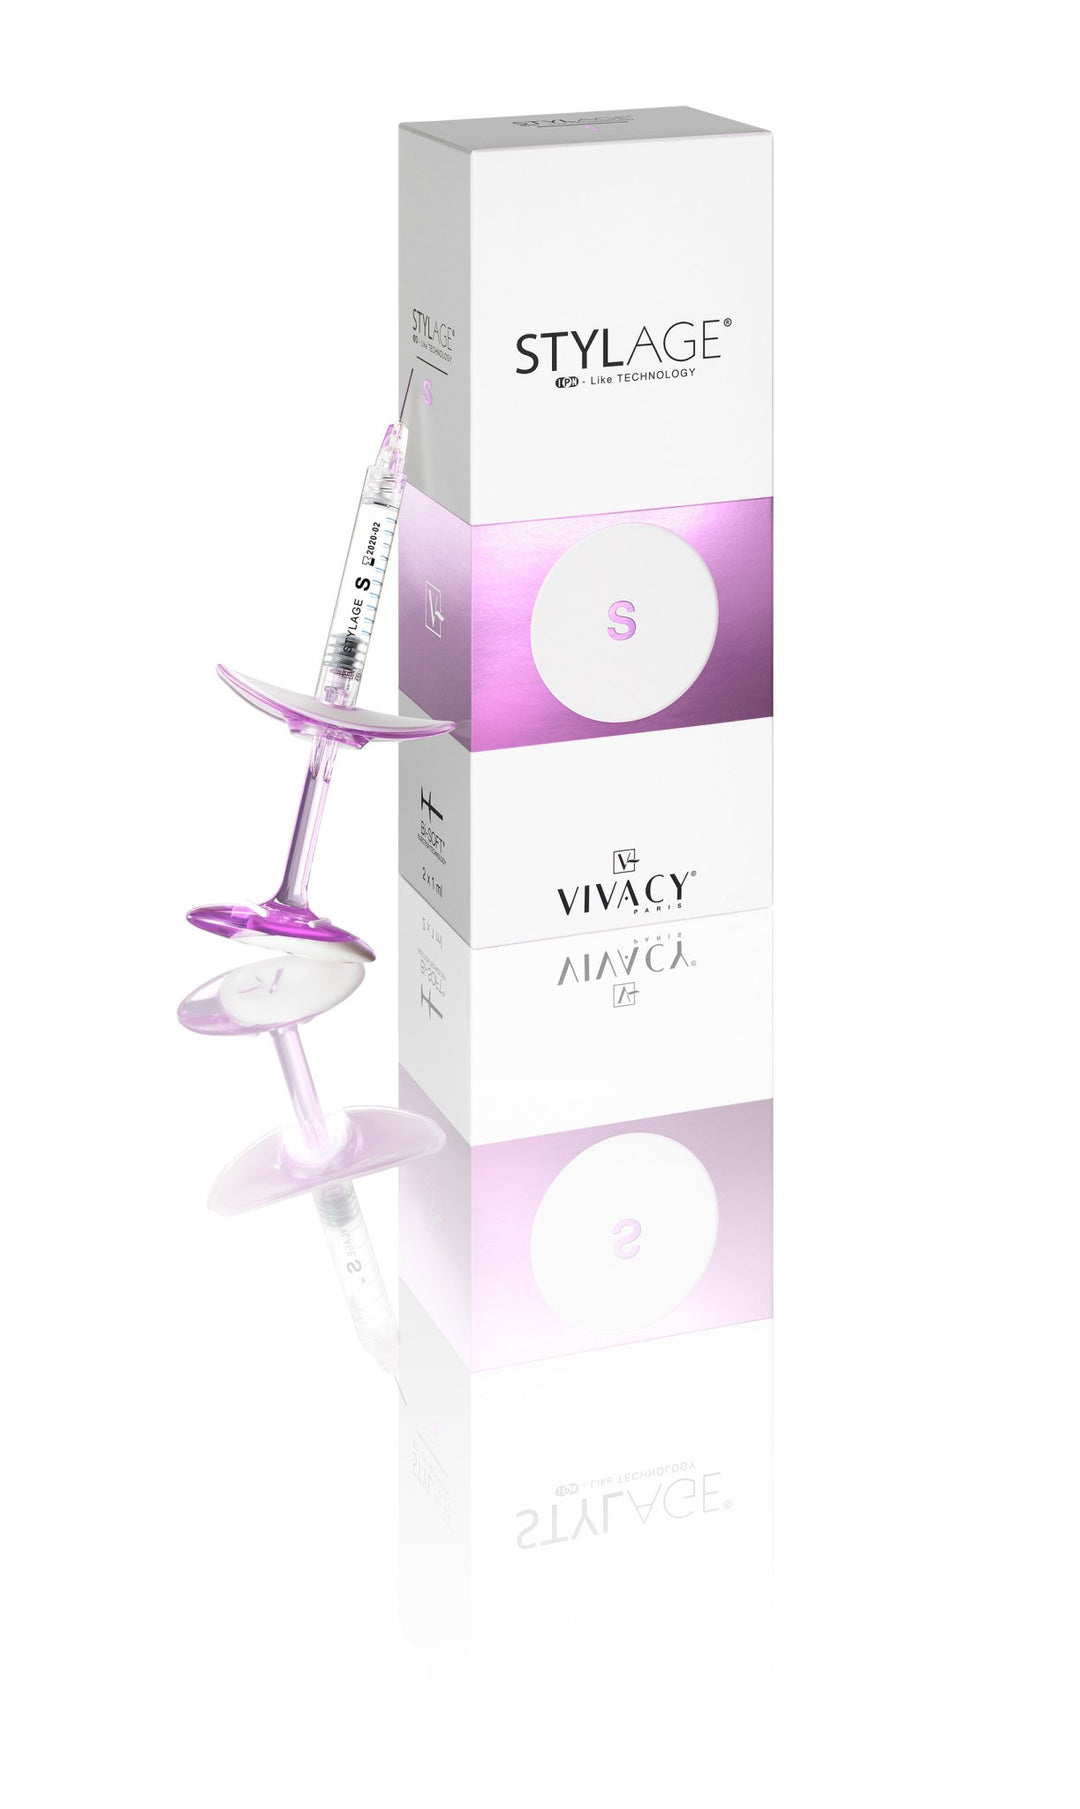 Vivacy - Stylage S Bi-Soft 2 x 0,8ml - DANYCARE